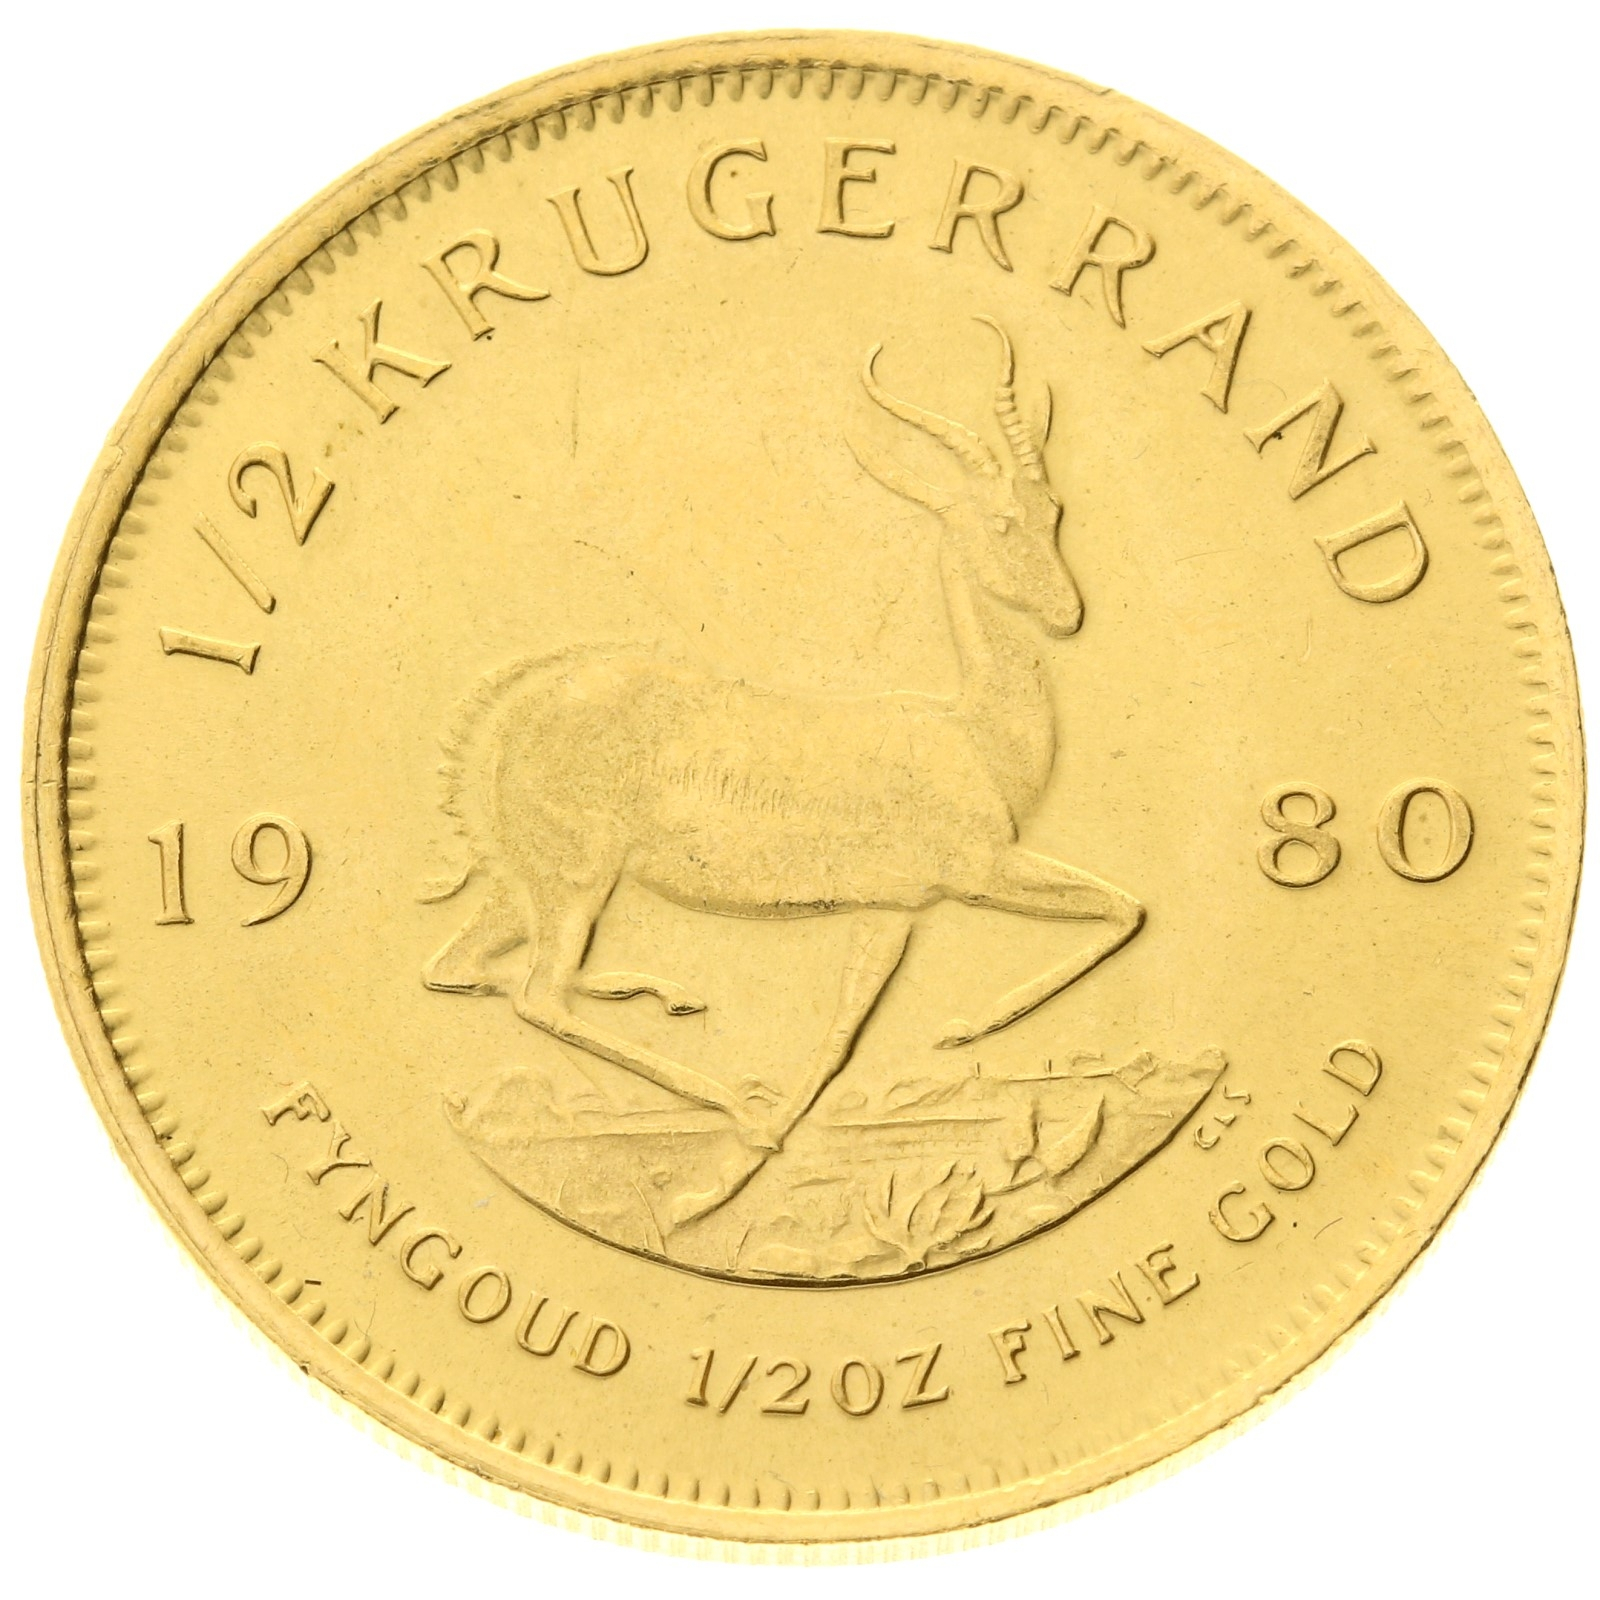 South Africa - ½ krugerrand - 1980 - 1/2oz 